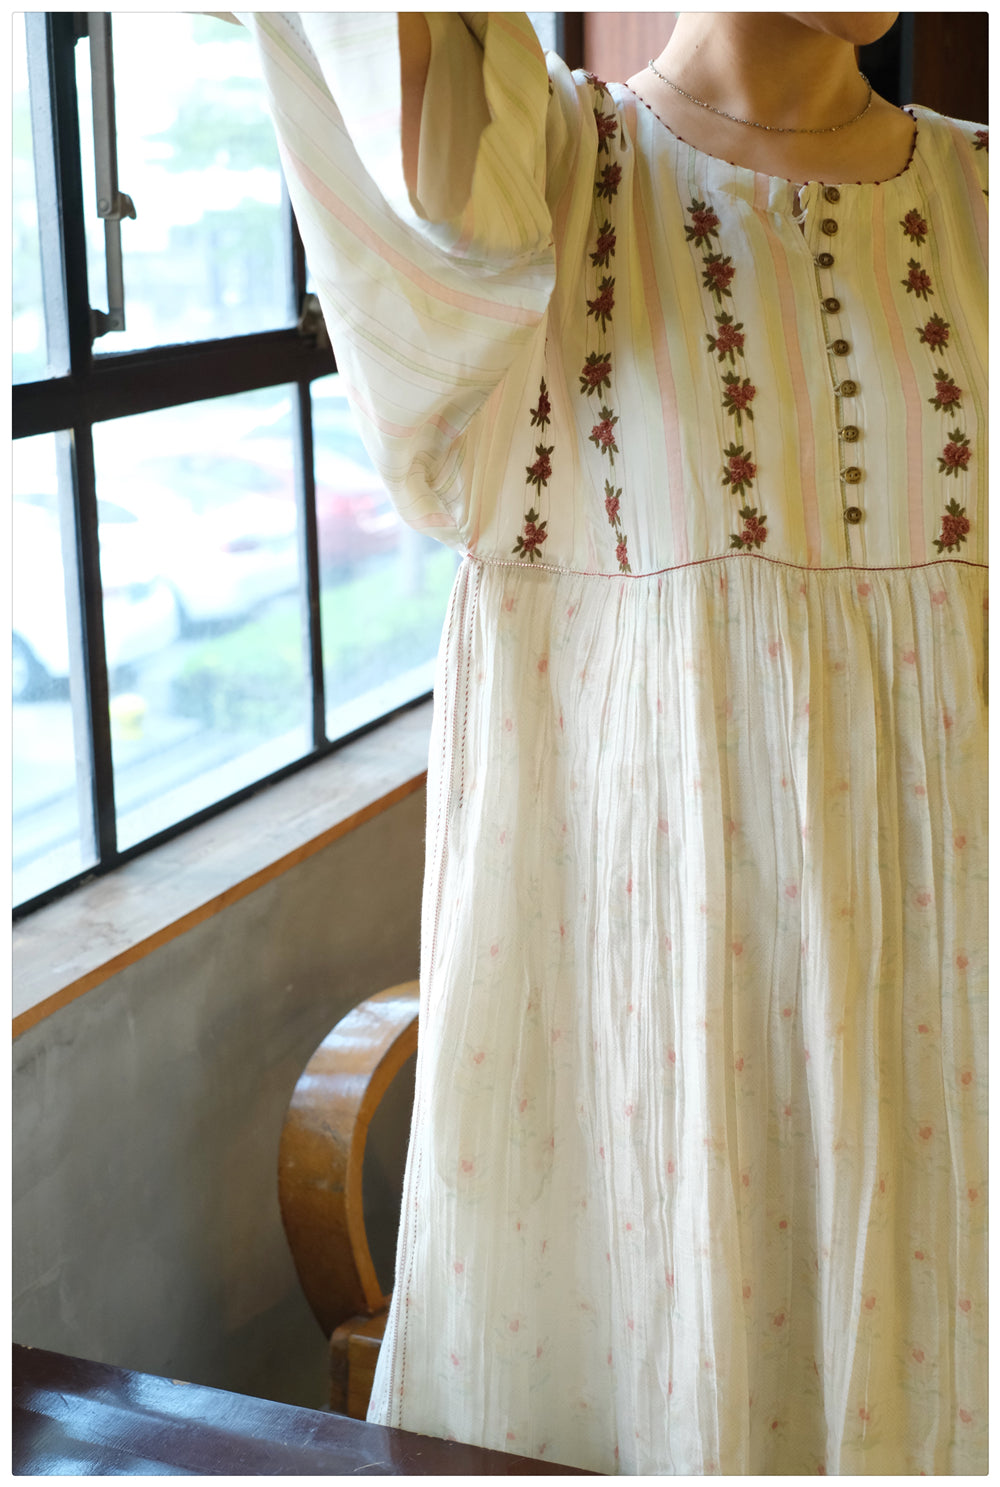 Printed Kaftan Dress With Embroidered Yoke